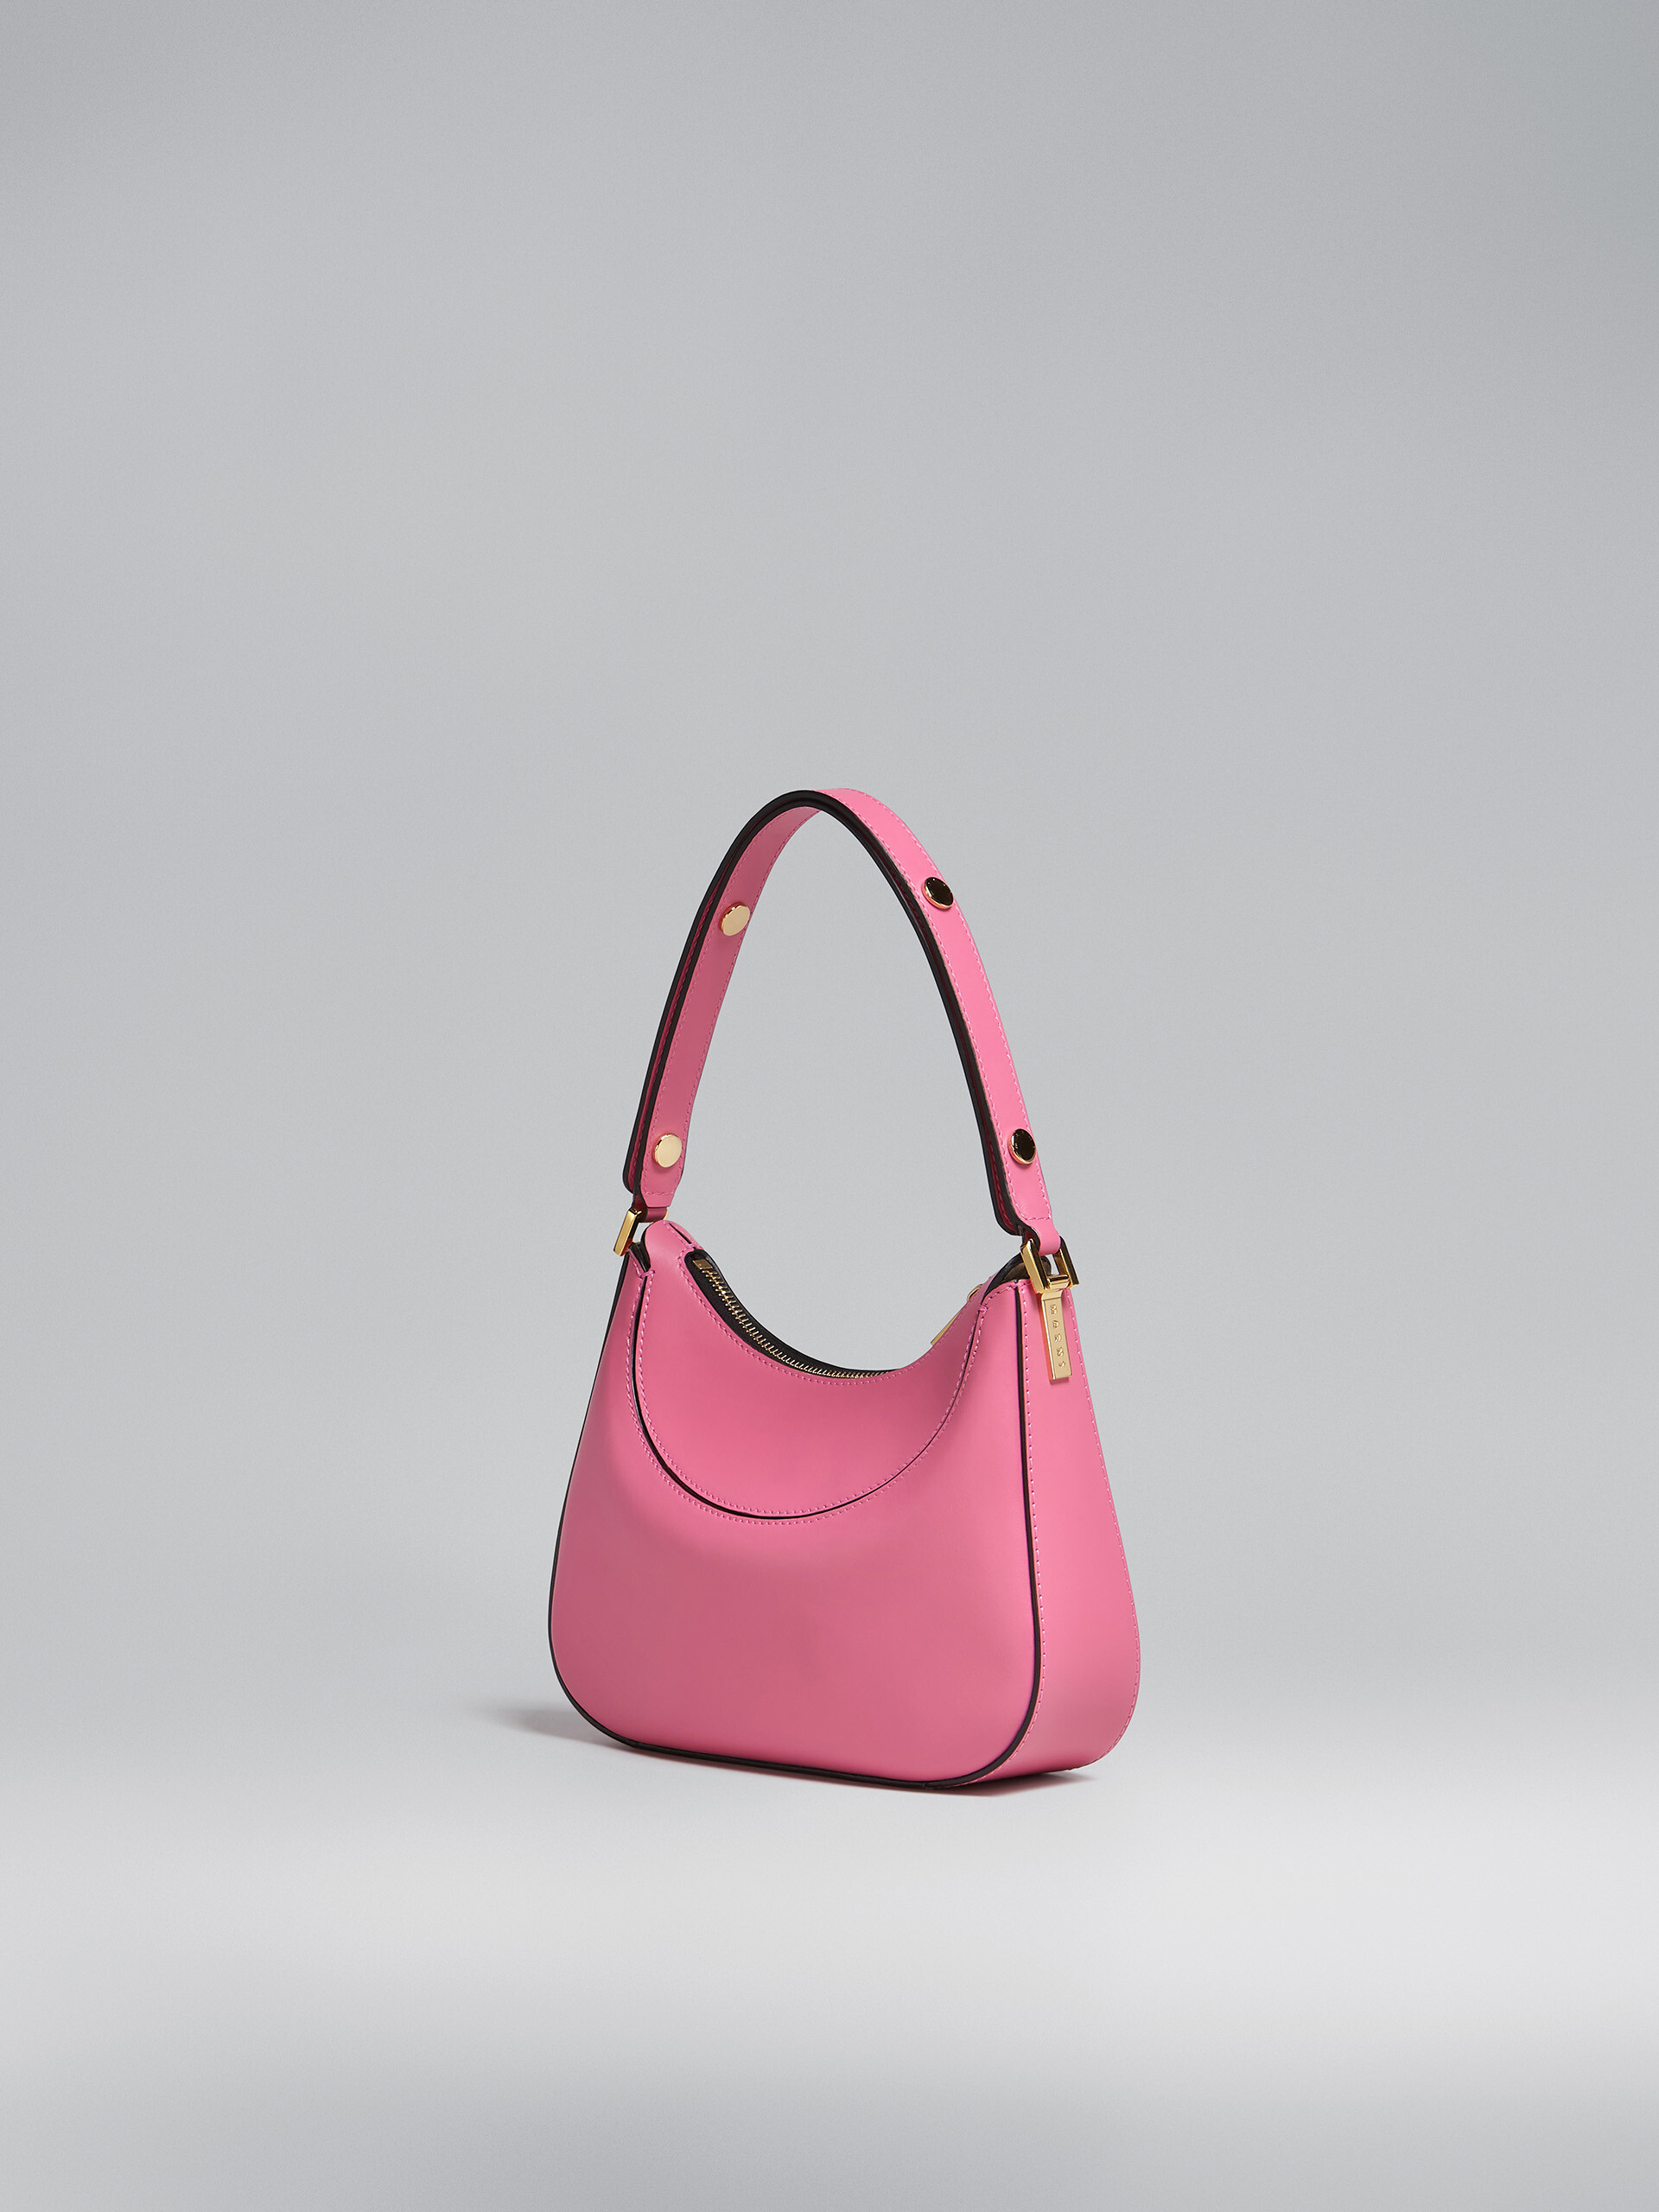 Mini-sac Milano en cuir rose - Sacs à main - Image 3